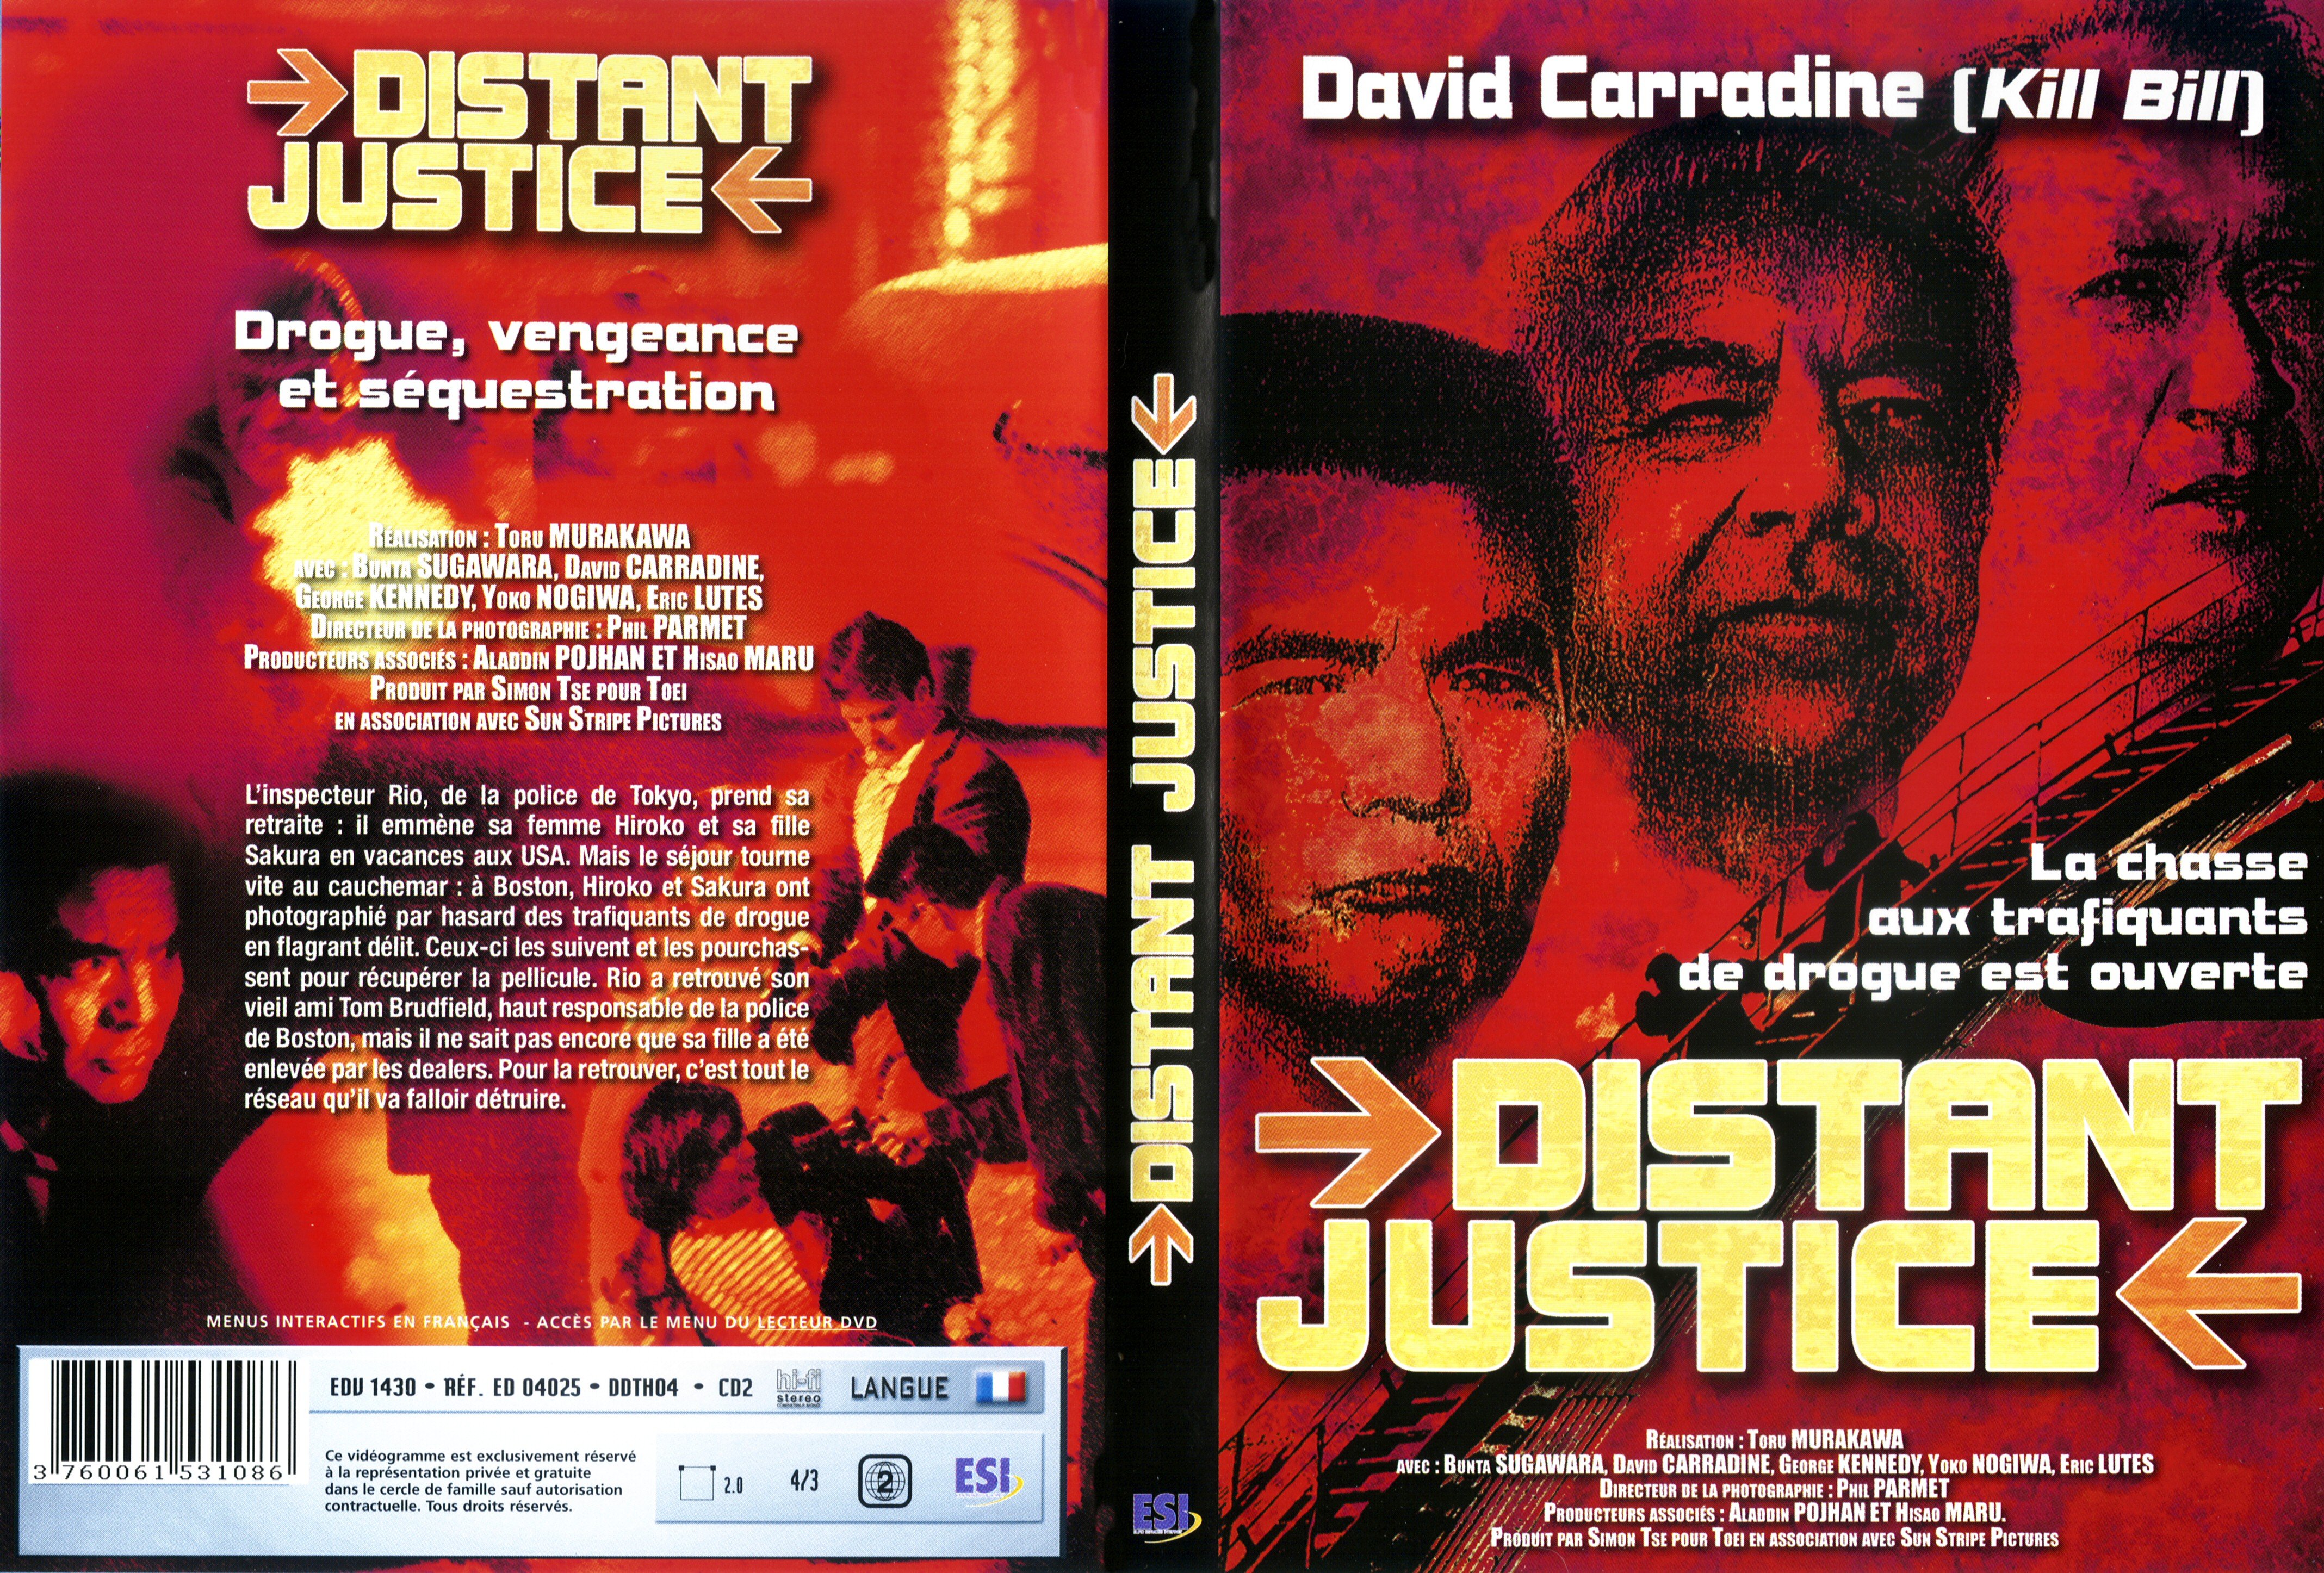 Jaquette DVD Distant justice